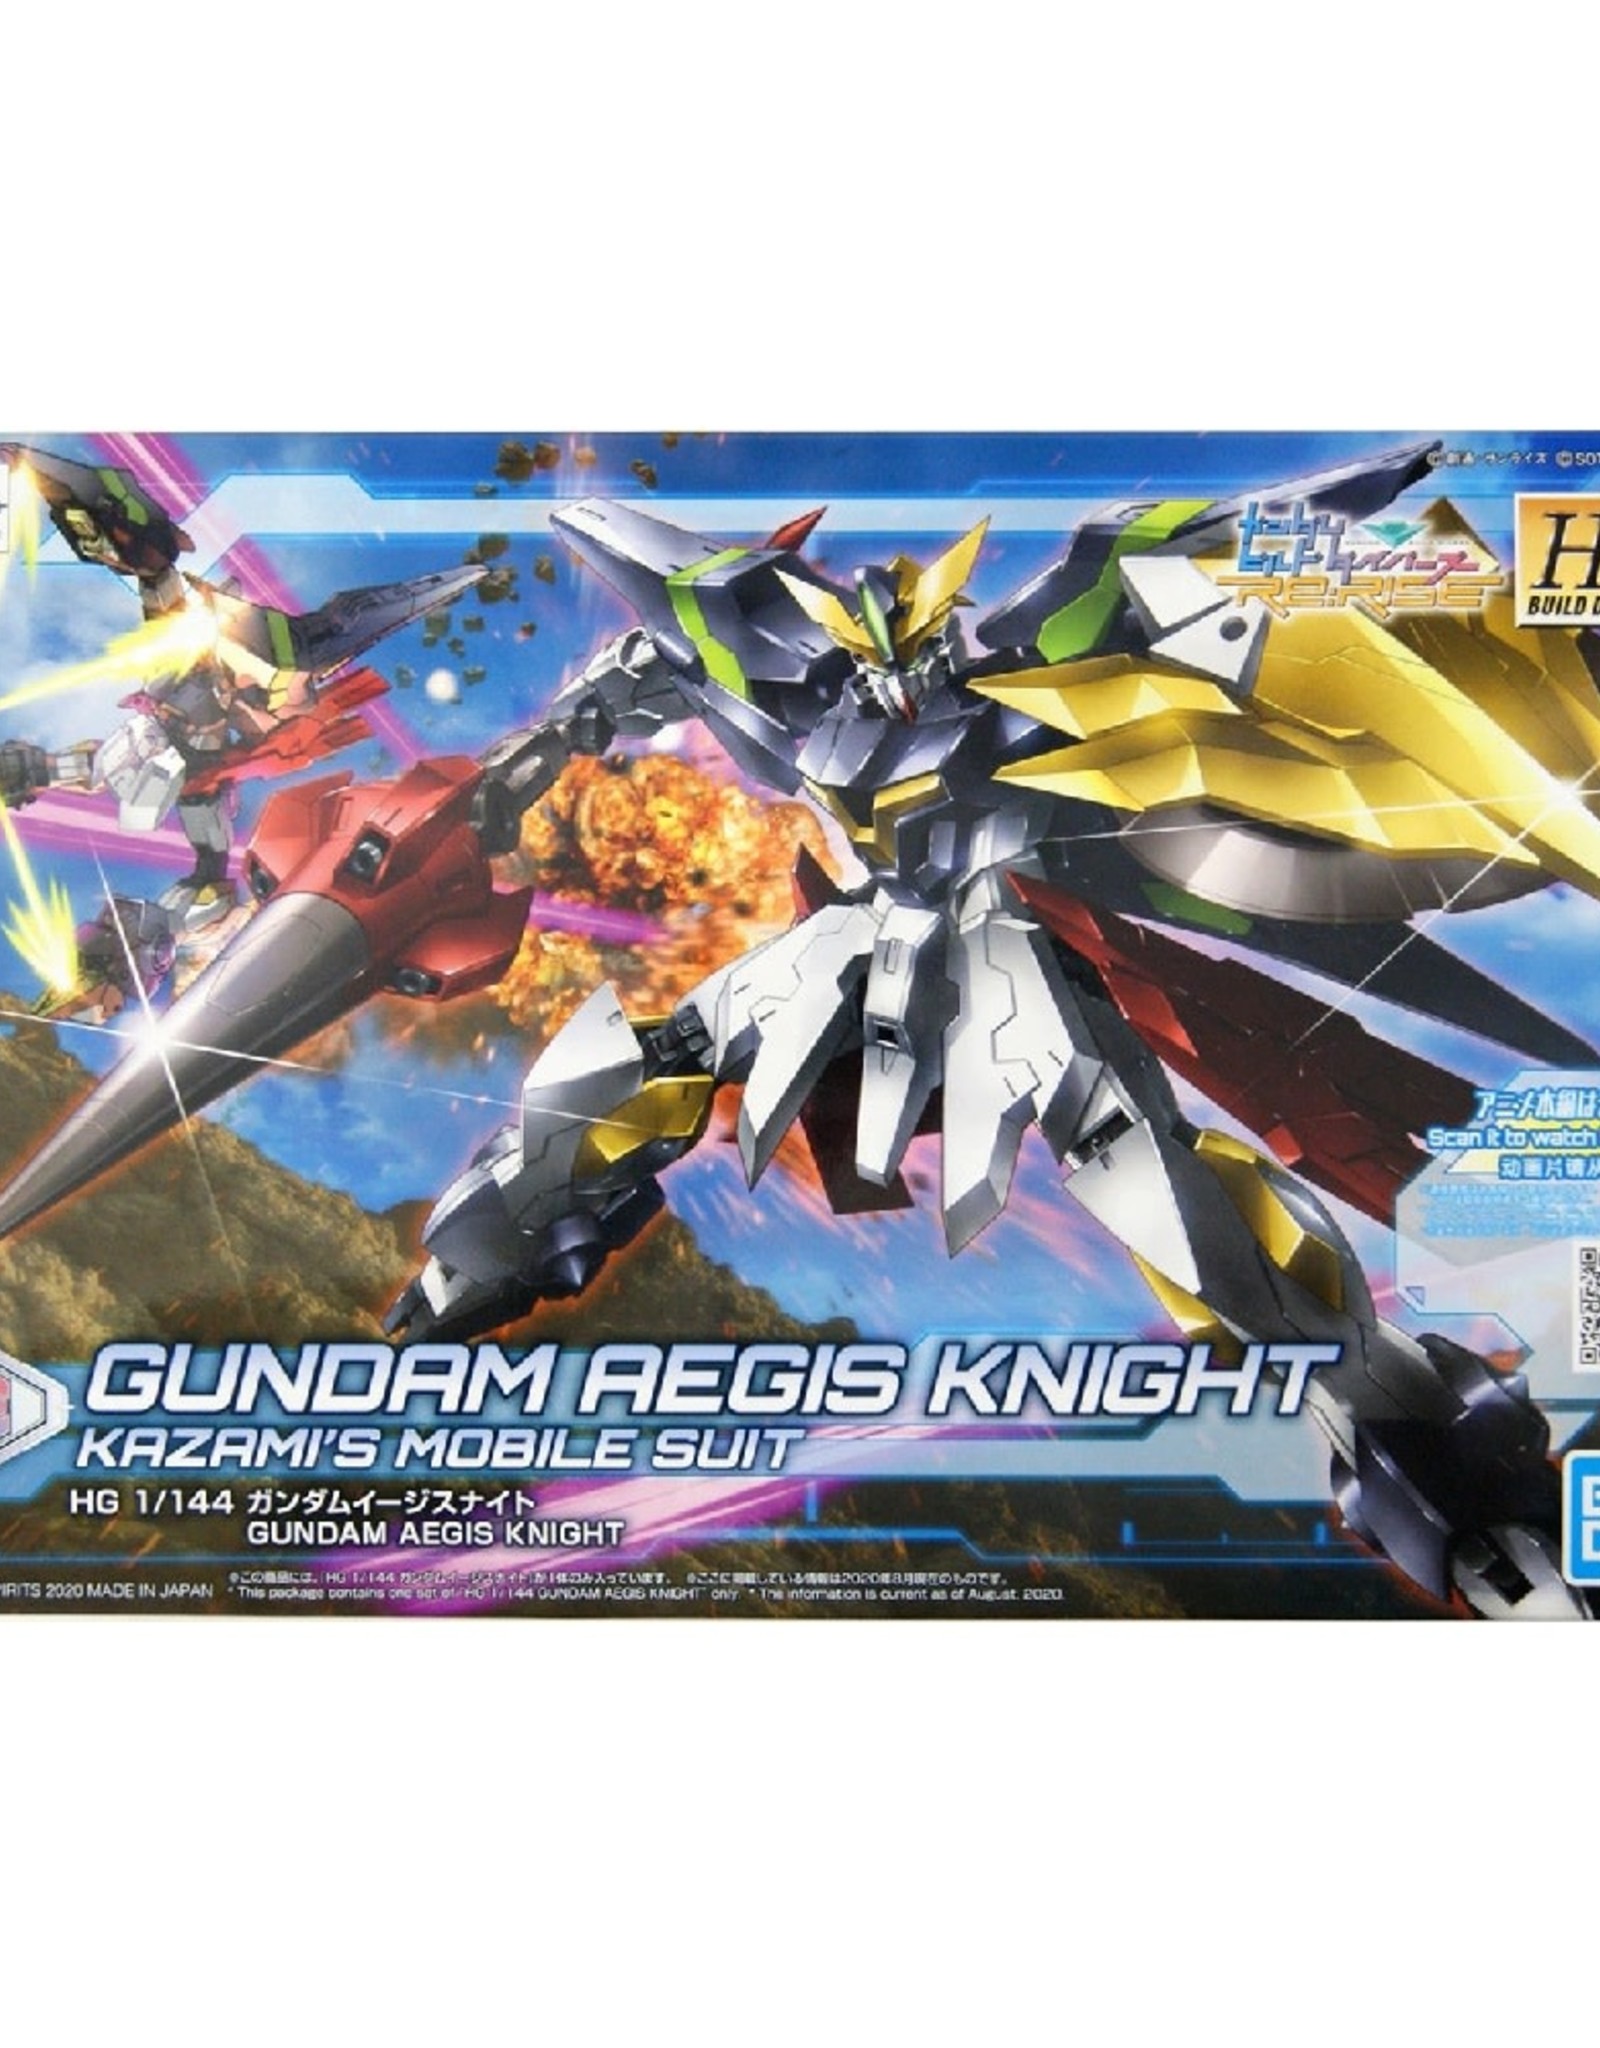 Gundam Aegis Knight 033 Kazami S Mobile Suit Family Fun Hobbies